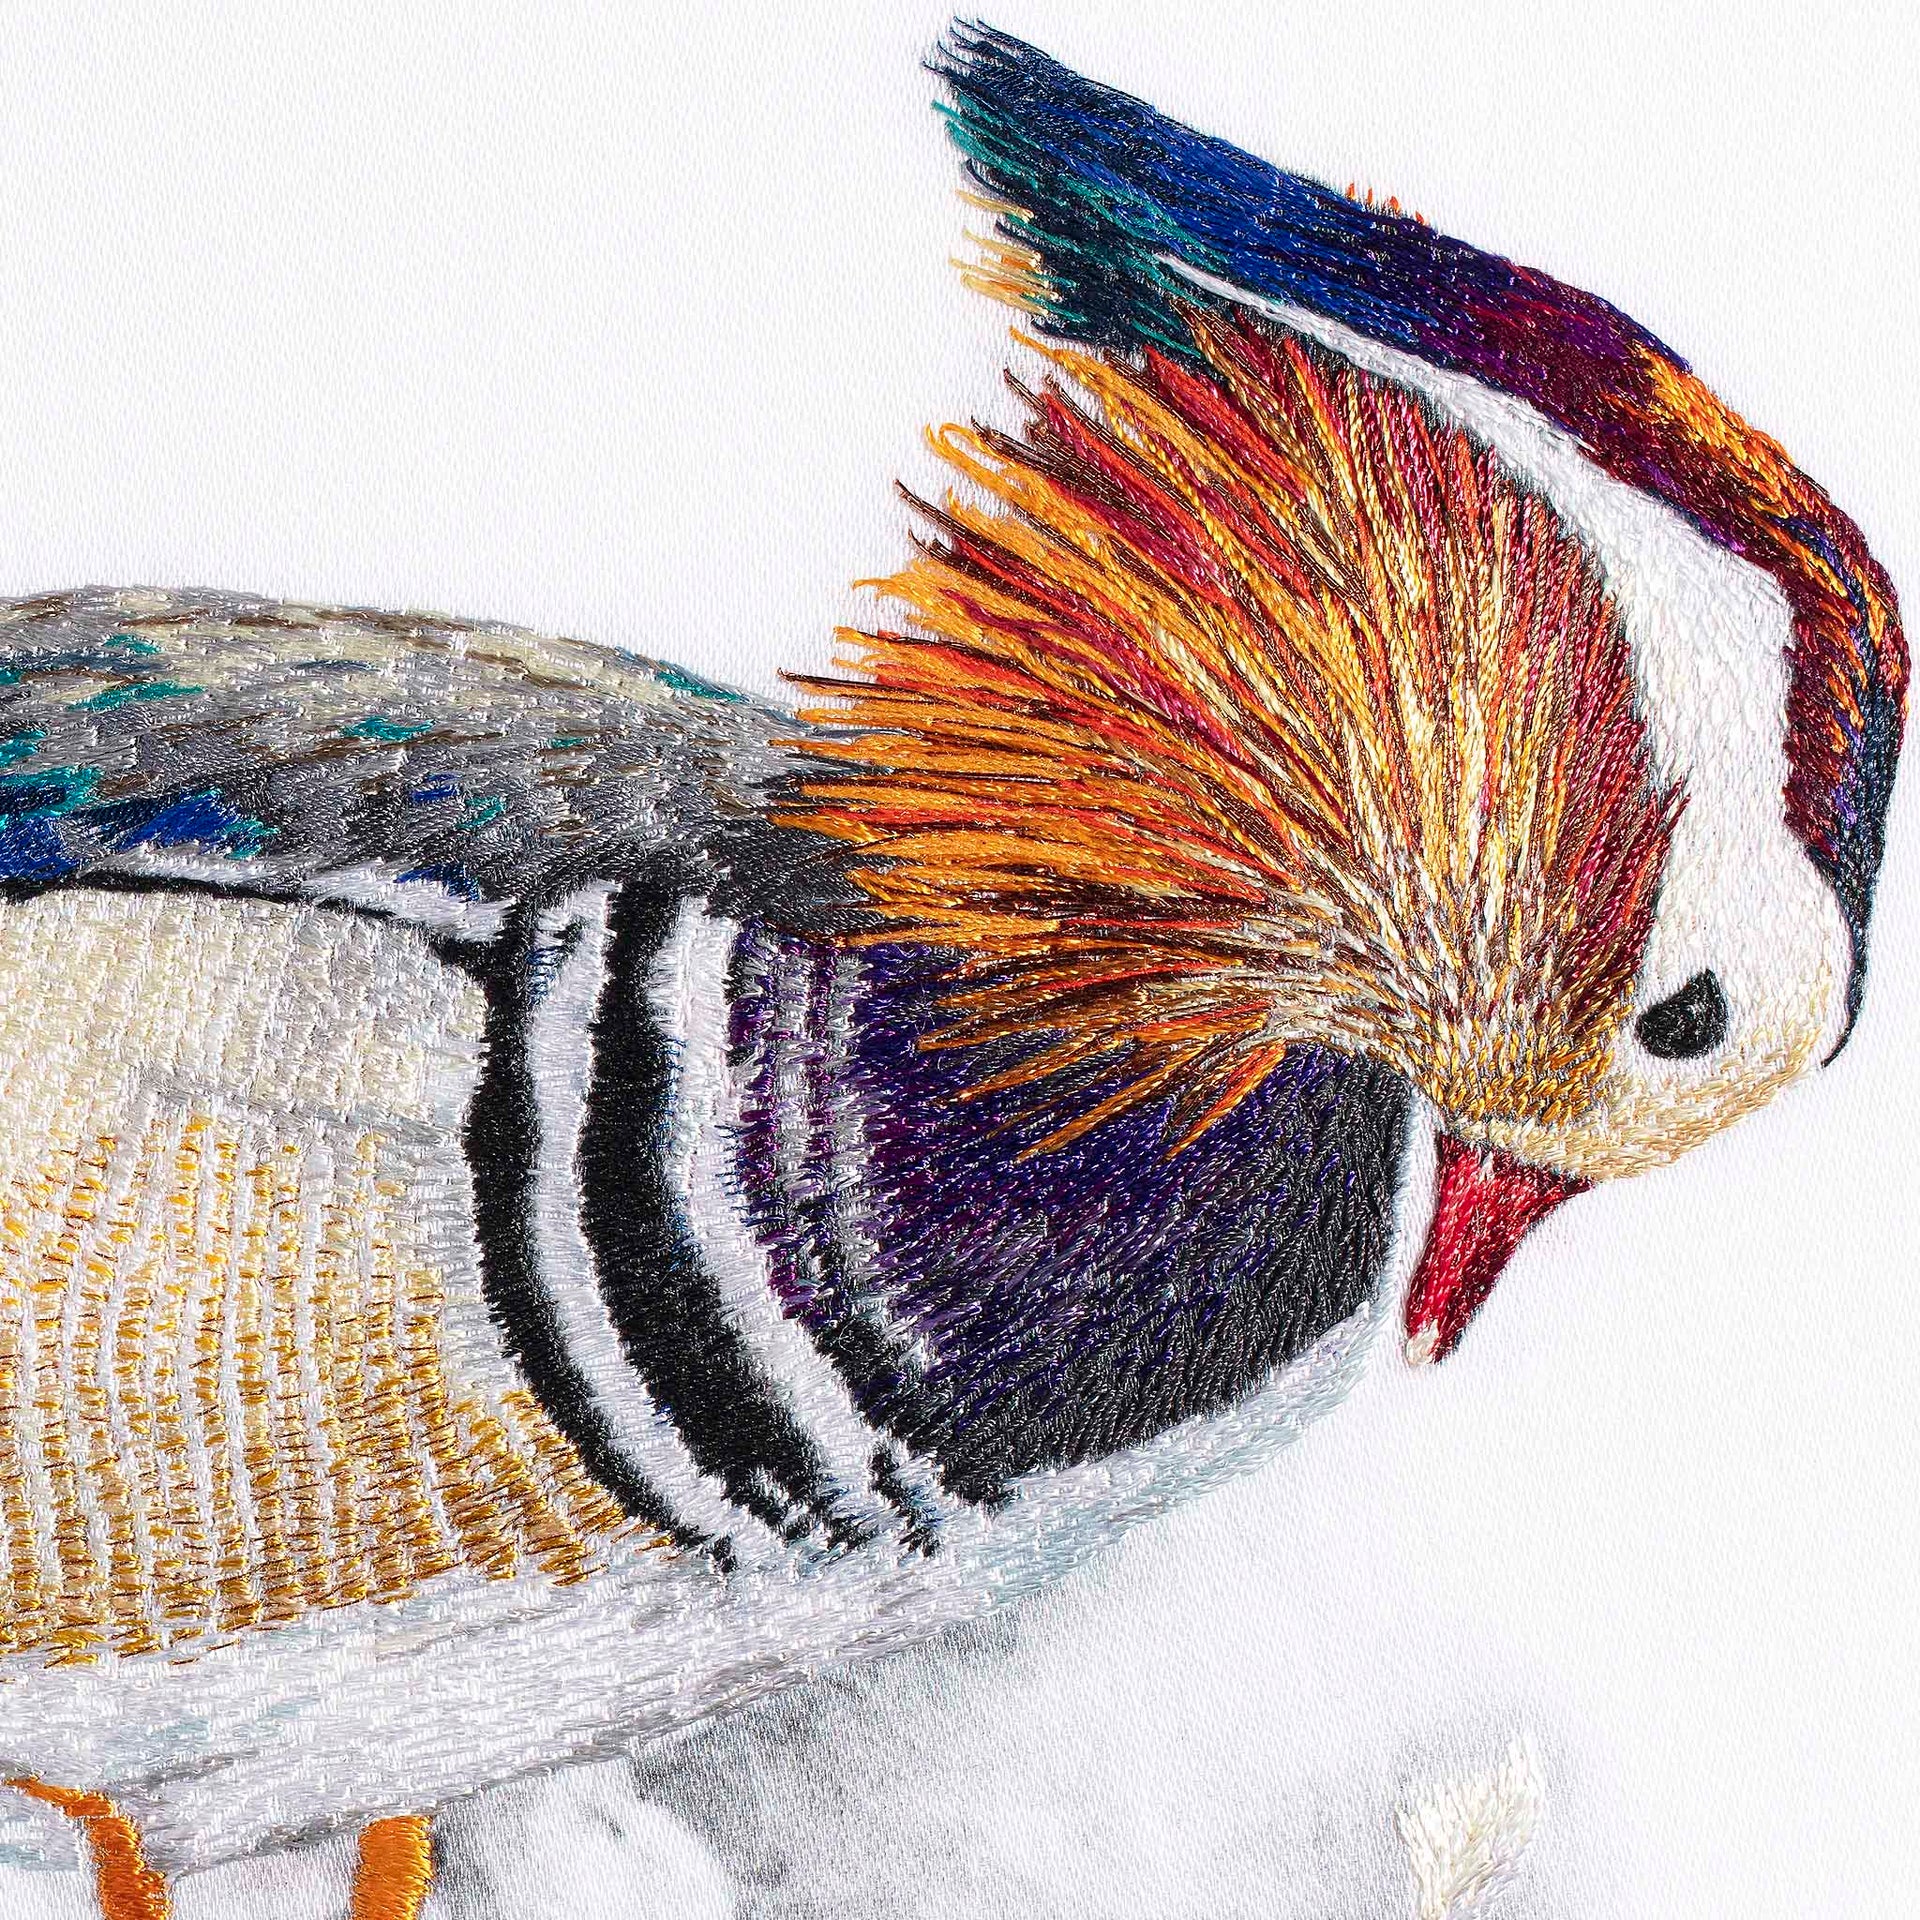 Mandarin duck & fish original hand embroidered artwork close up